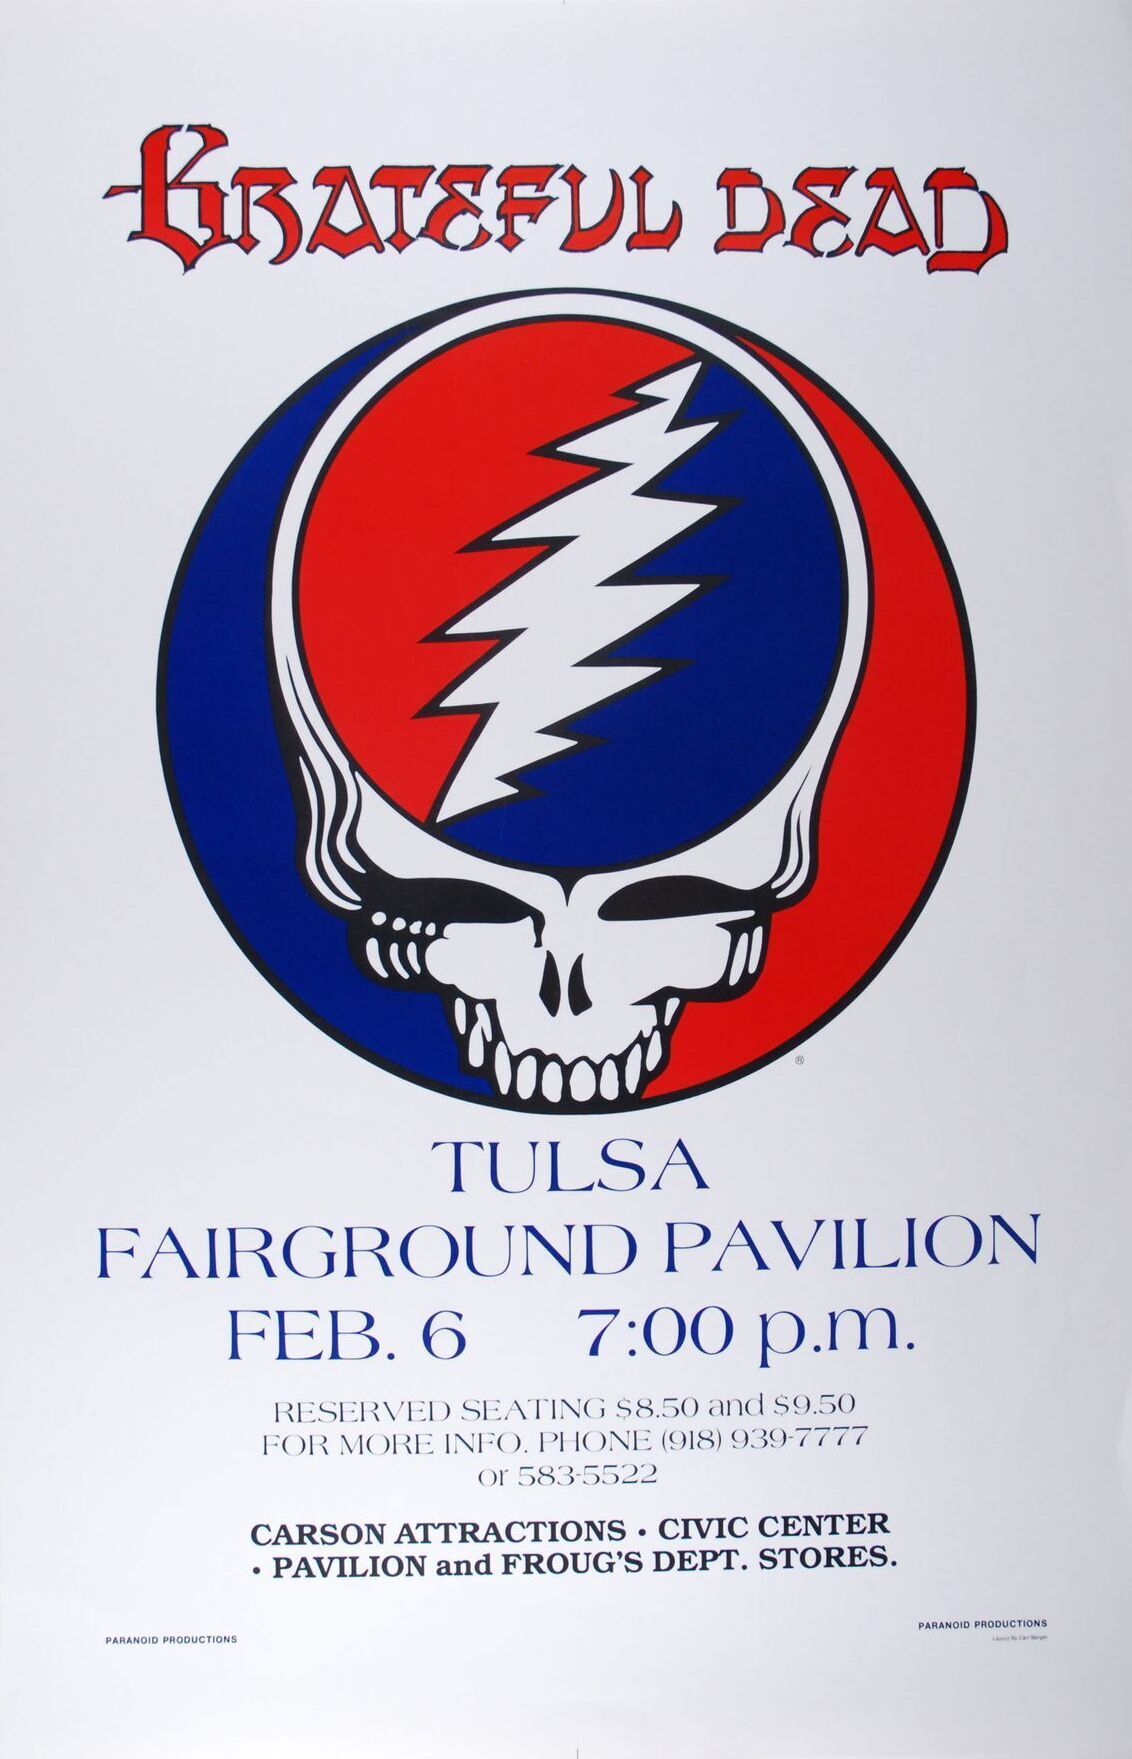 Grateful Dead Tulsa Fairground Pavilion 1979 Concert Poster